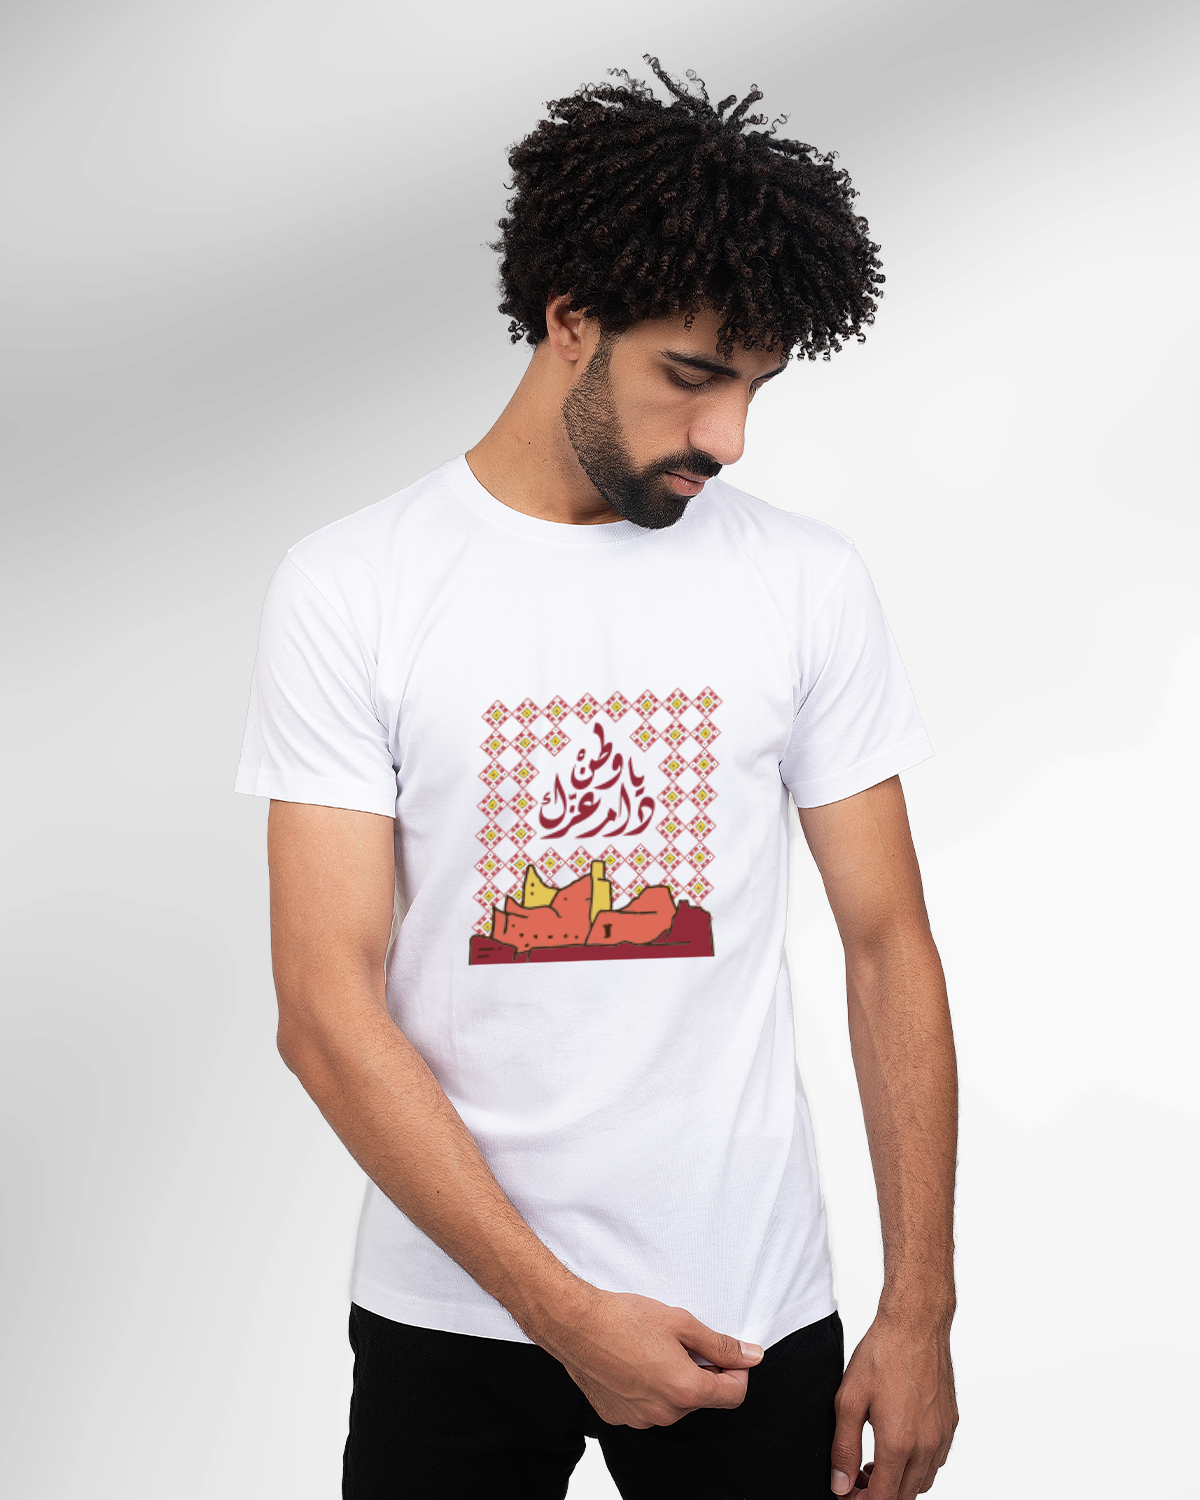 Men's Foundation Day T-shirt (Ya Watan Dam Eizk With Sadu Pattern)